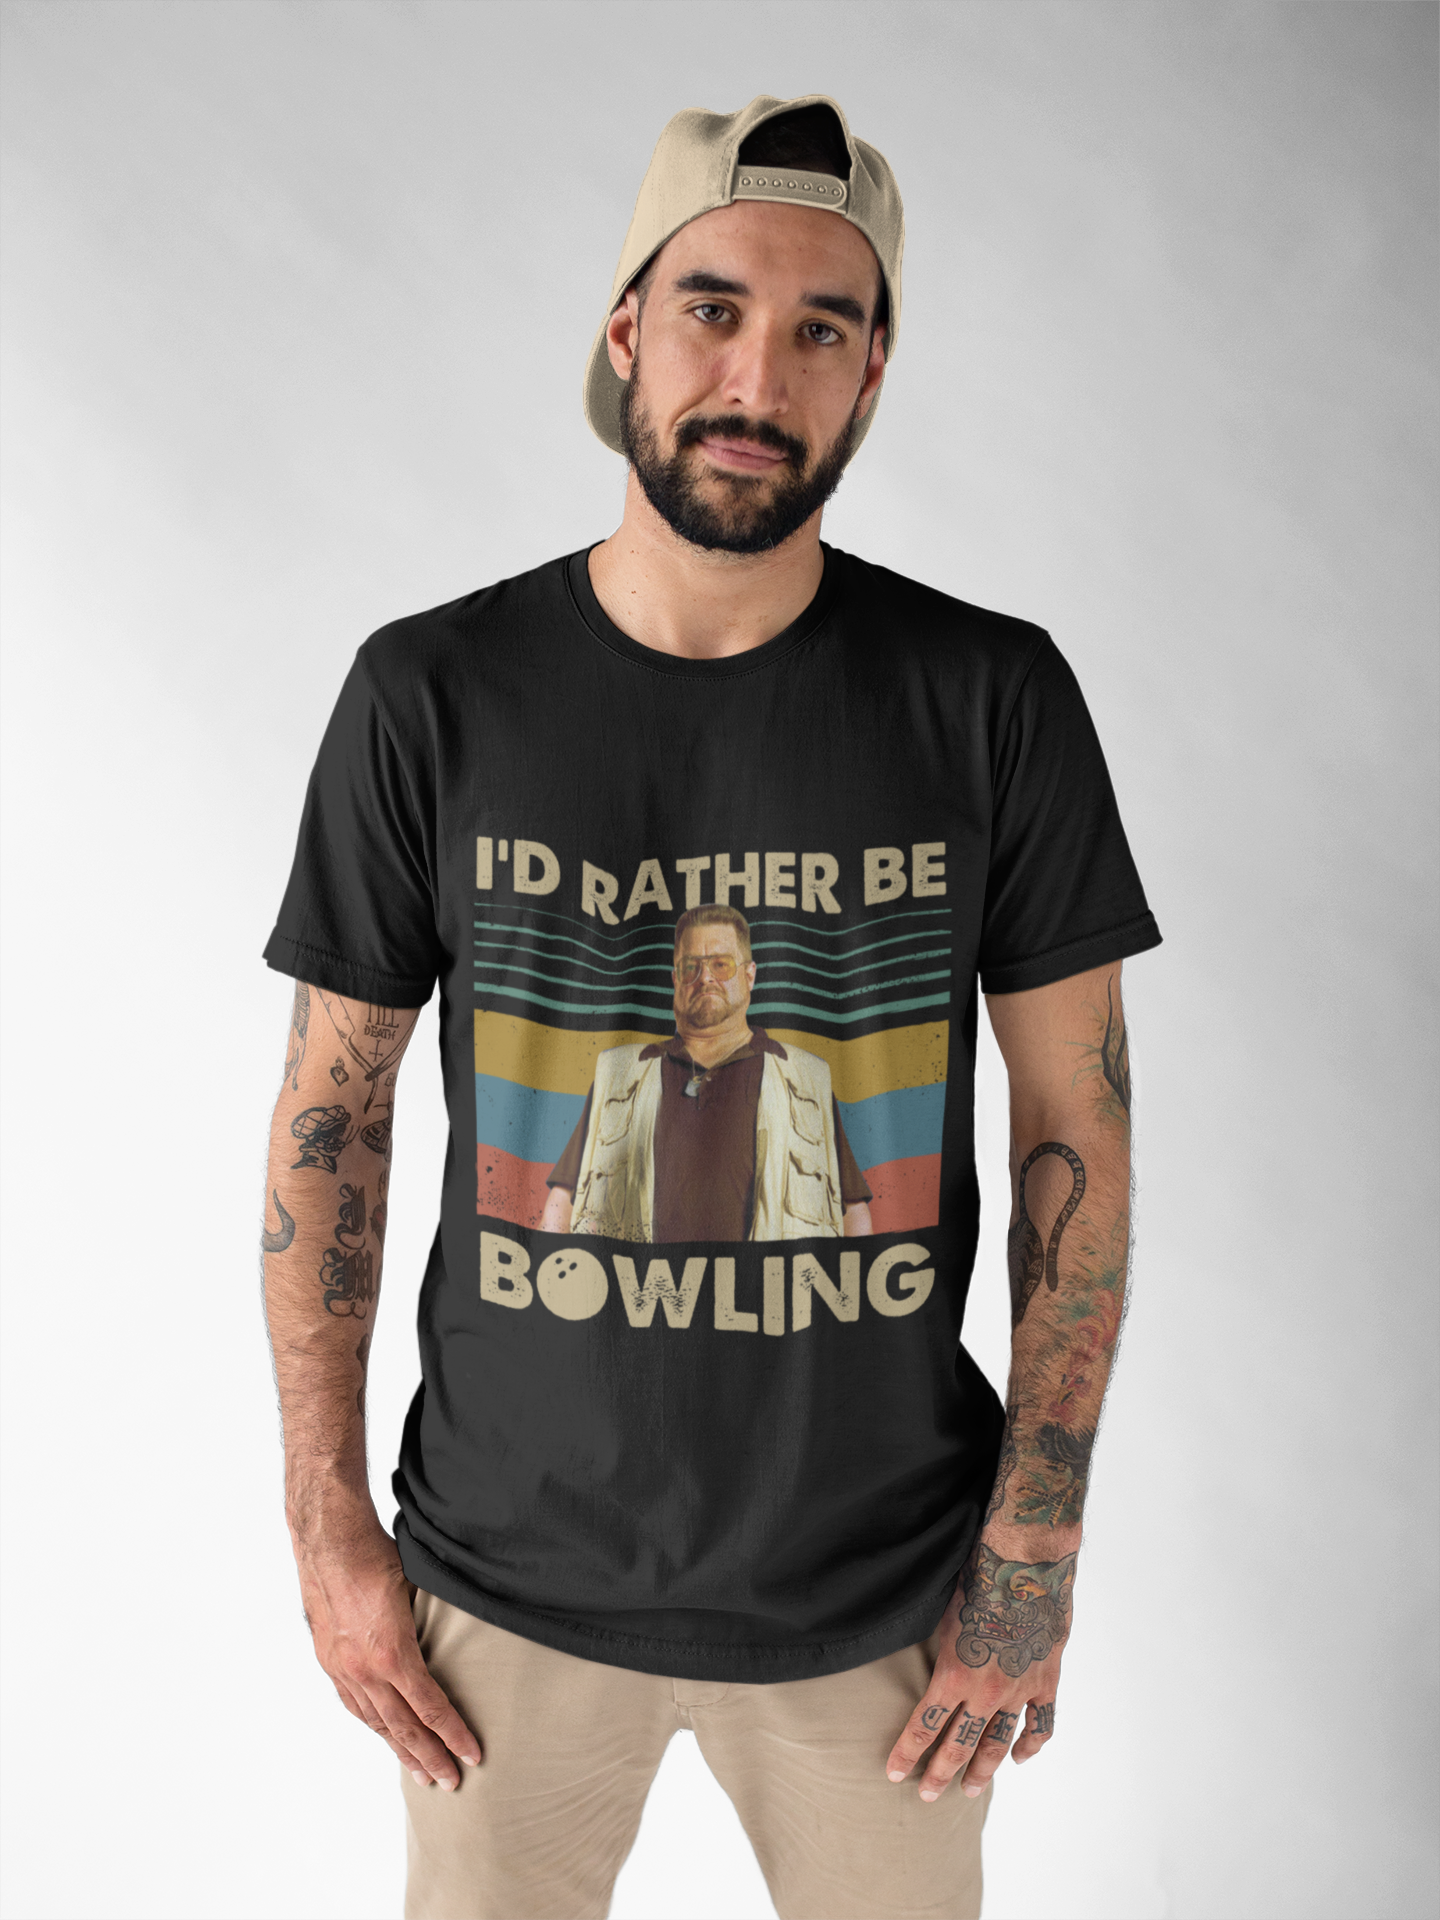 The Big Lebowski Vintage T Shirt, Id Rather Be Bowling Tshirt, Walter Sobchak T Shirt